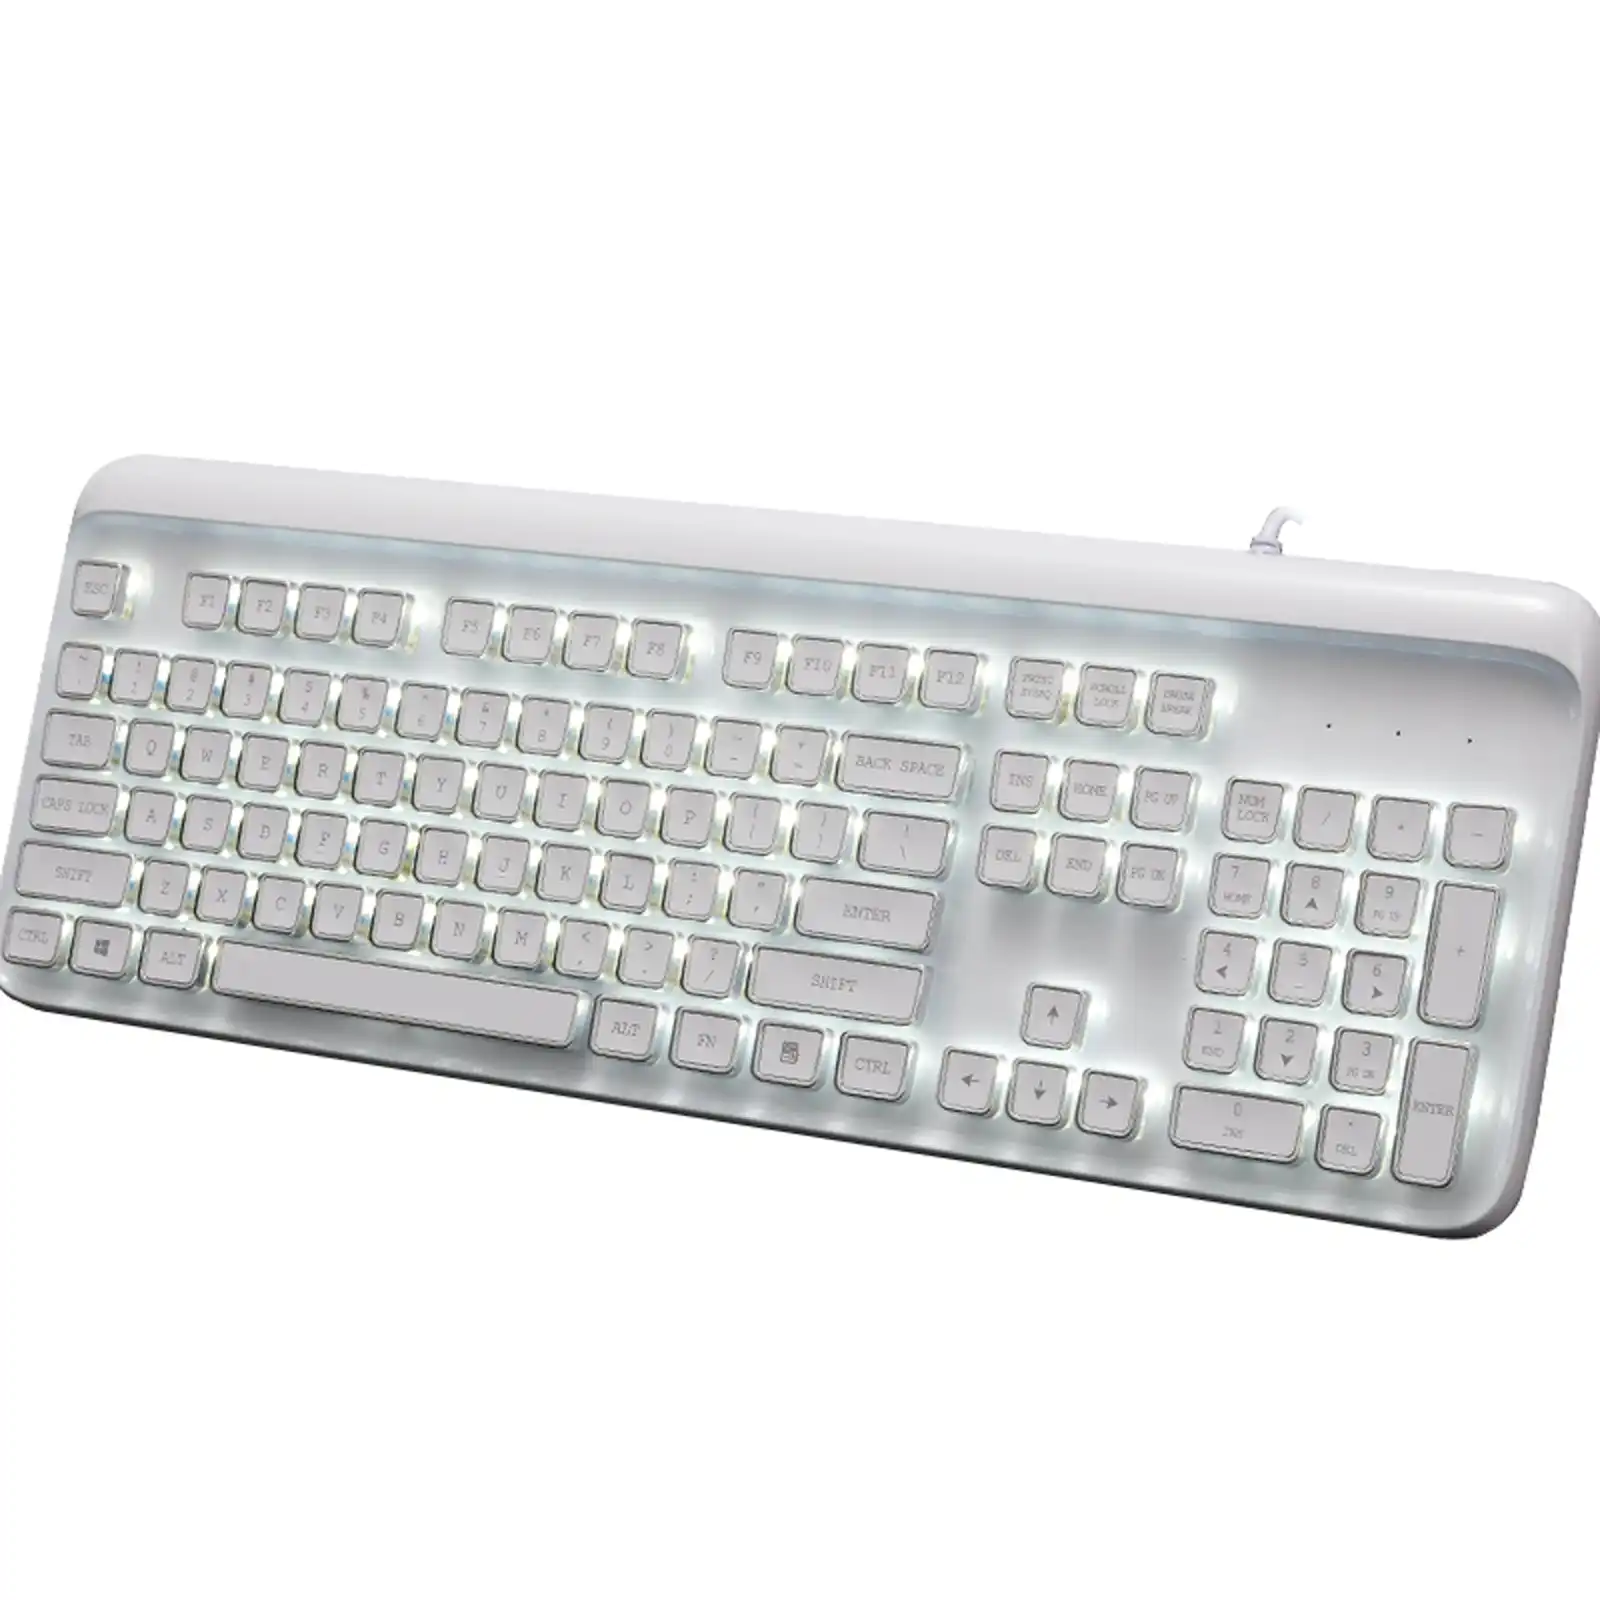 TODO Full Mechanical Gaming Keyboard Linear Blue Switch Rgb Led 104 Key Windows - White